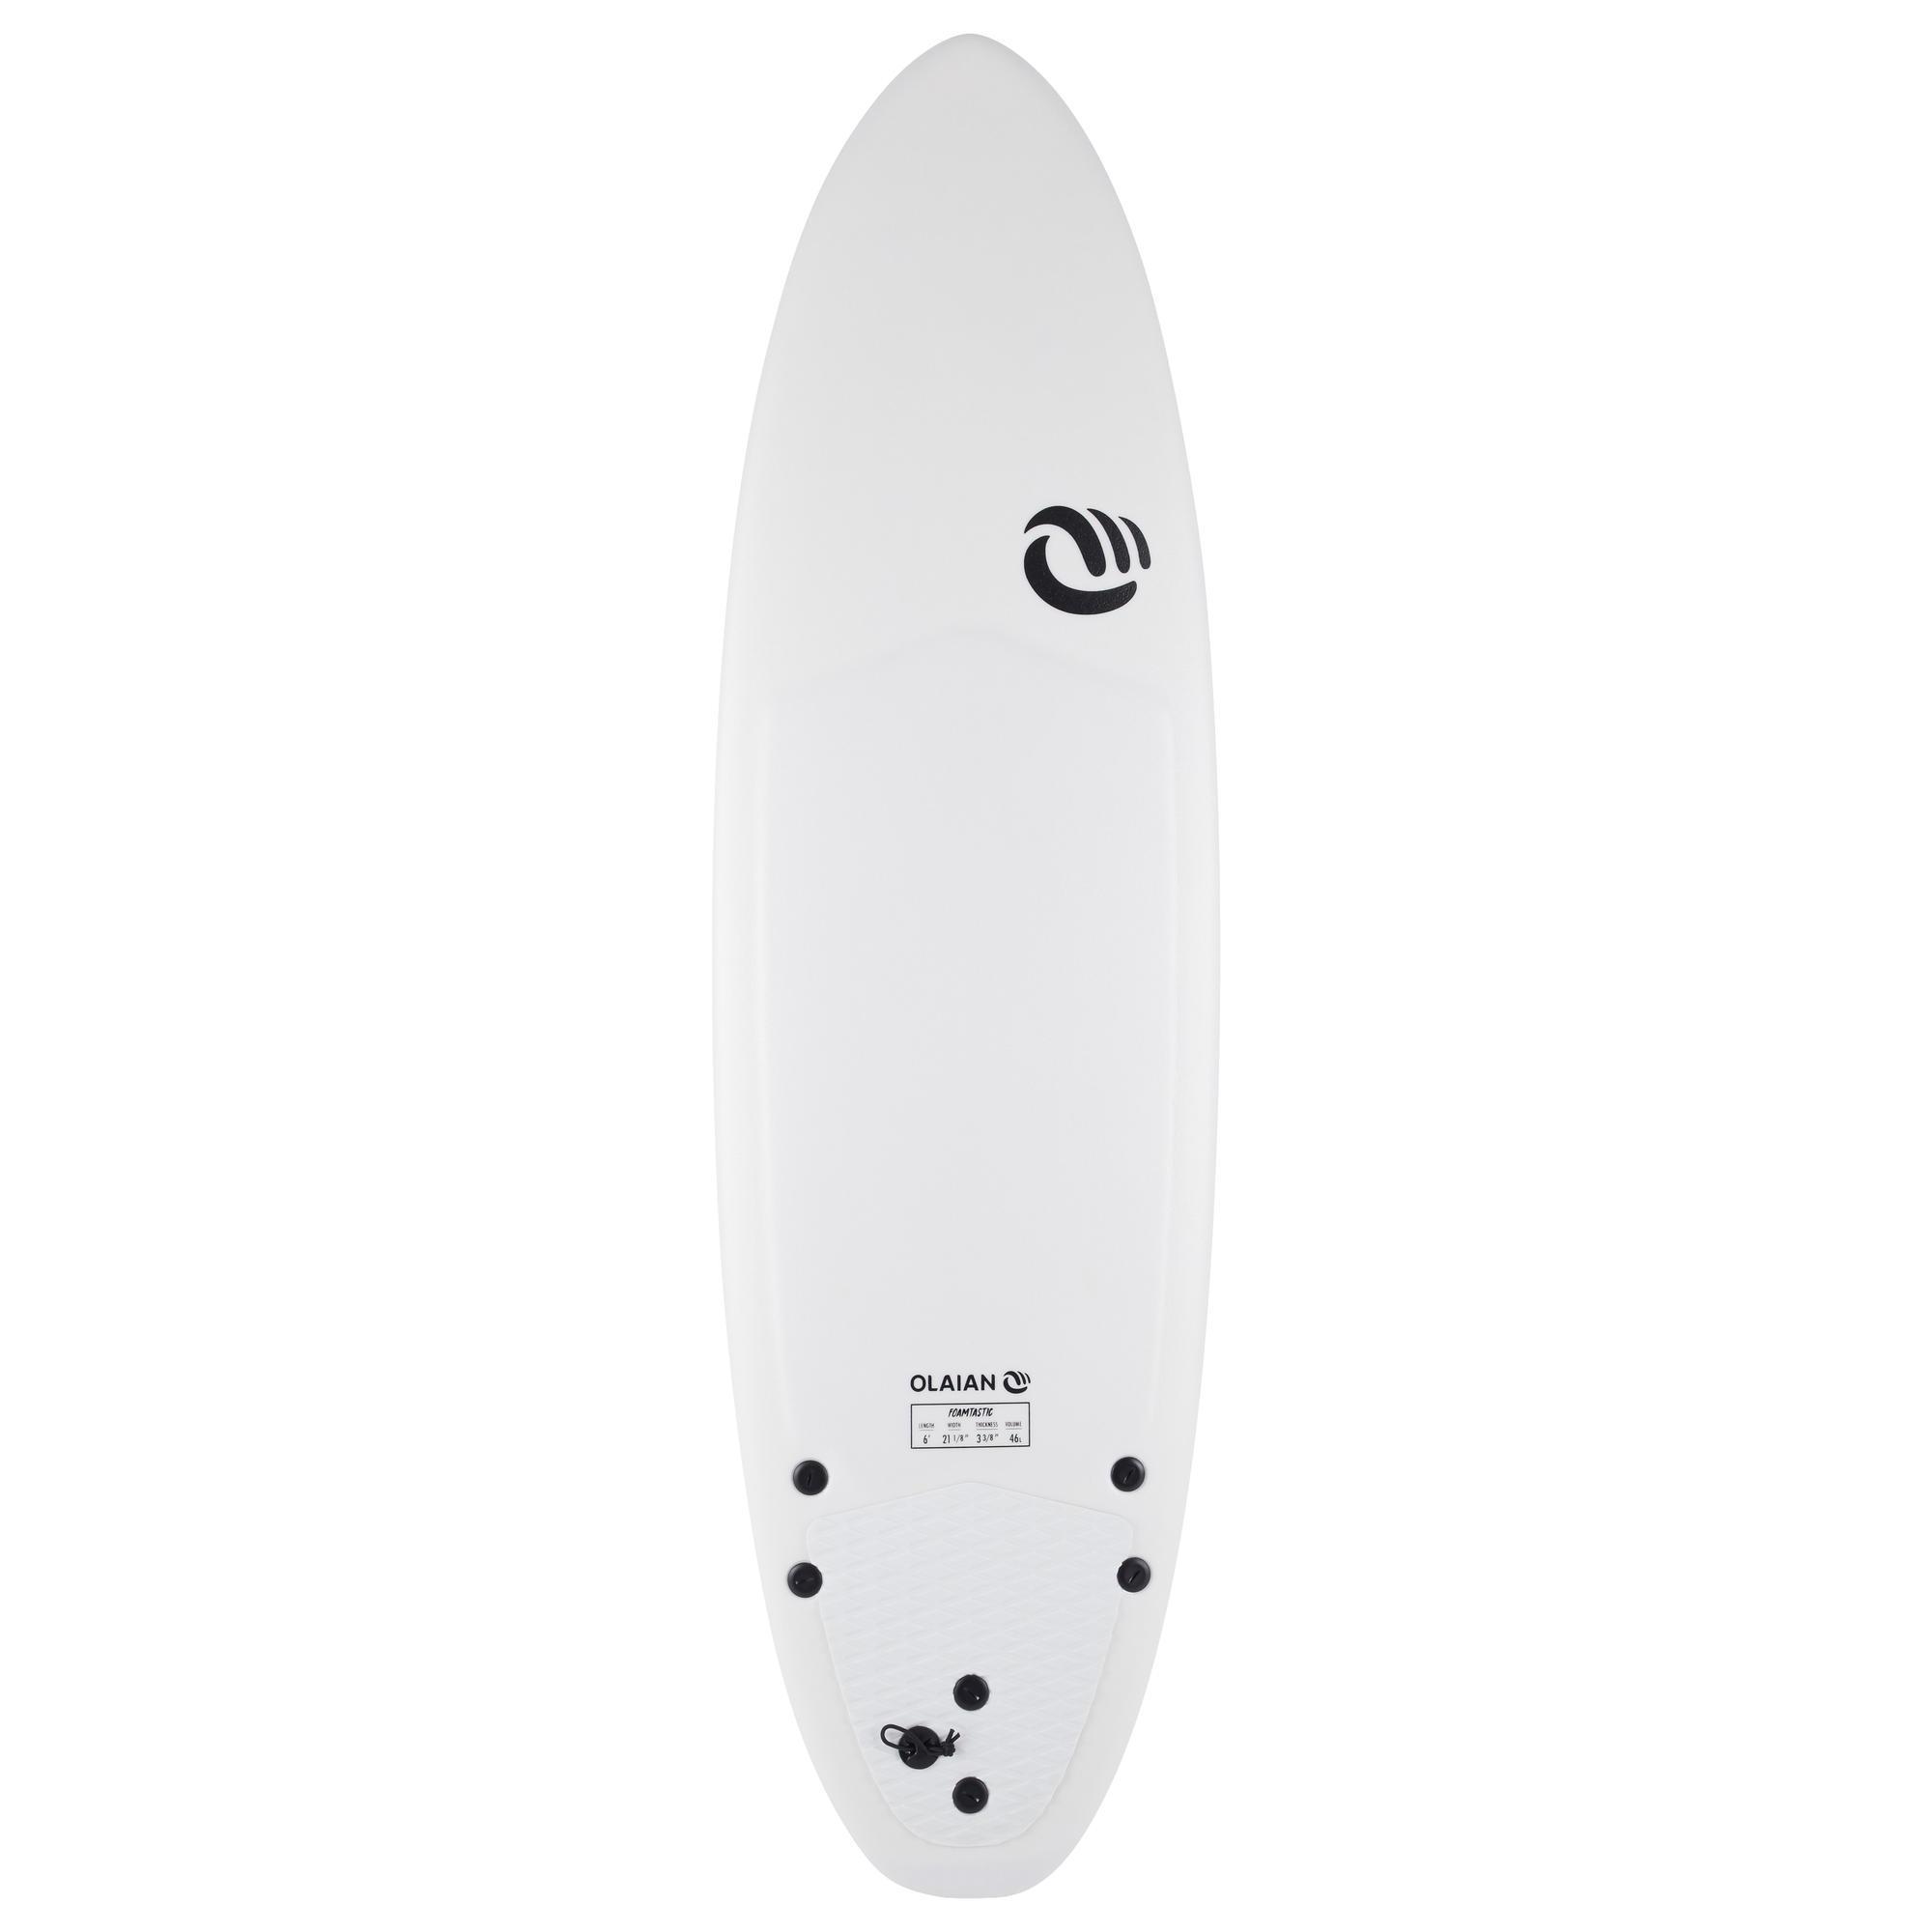 olaian surfboard 900